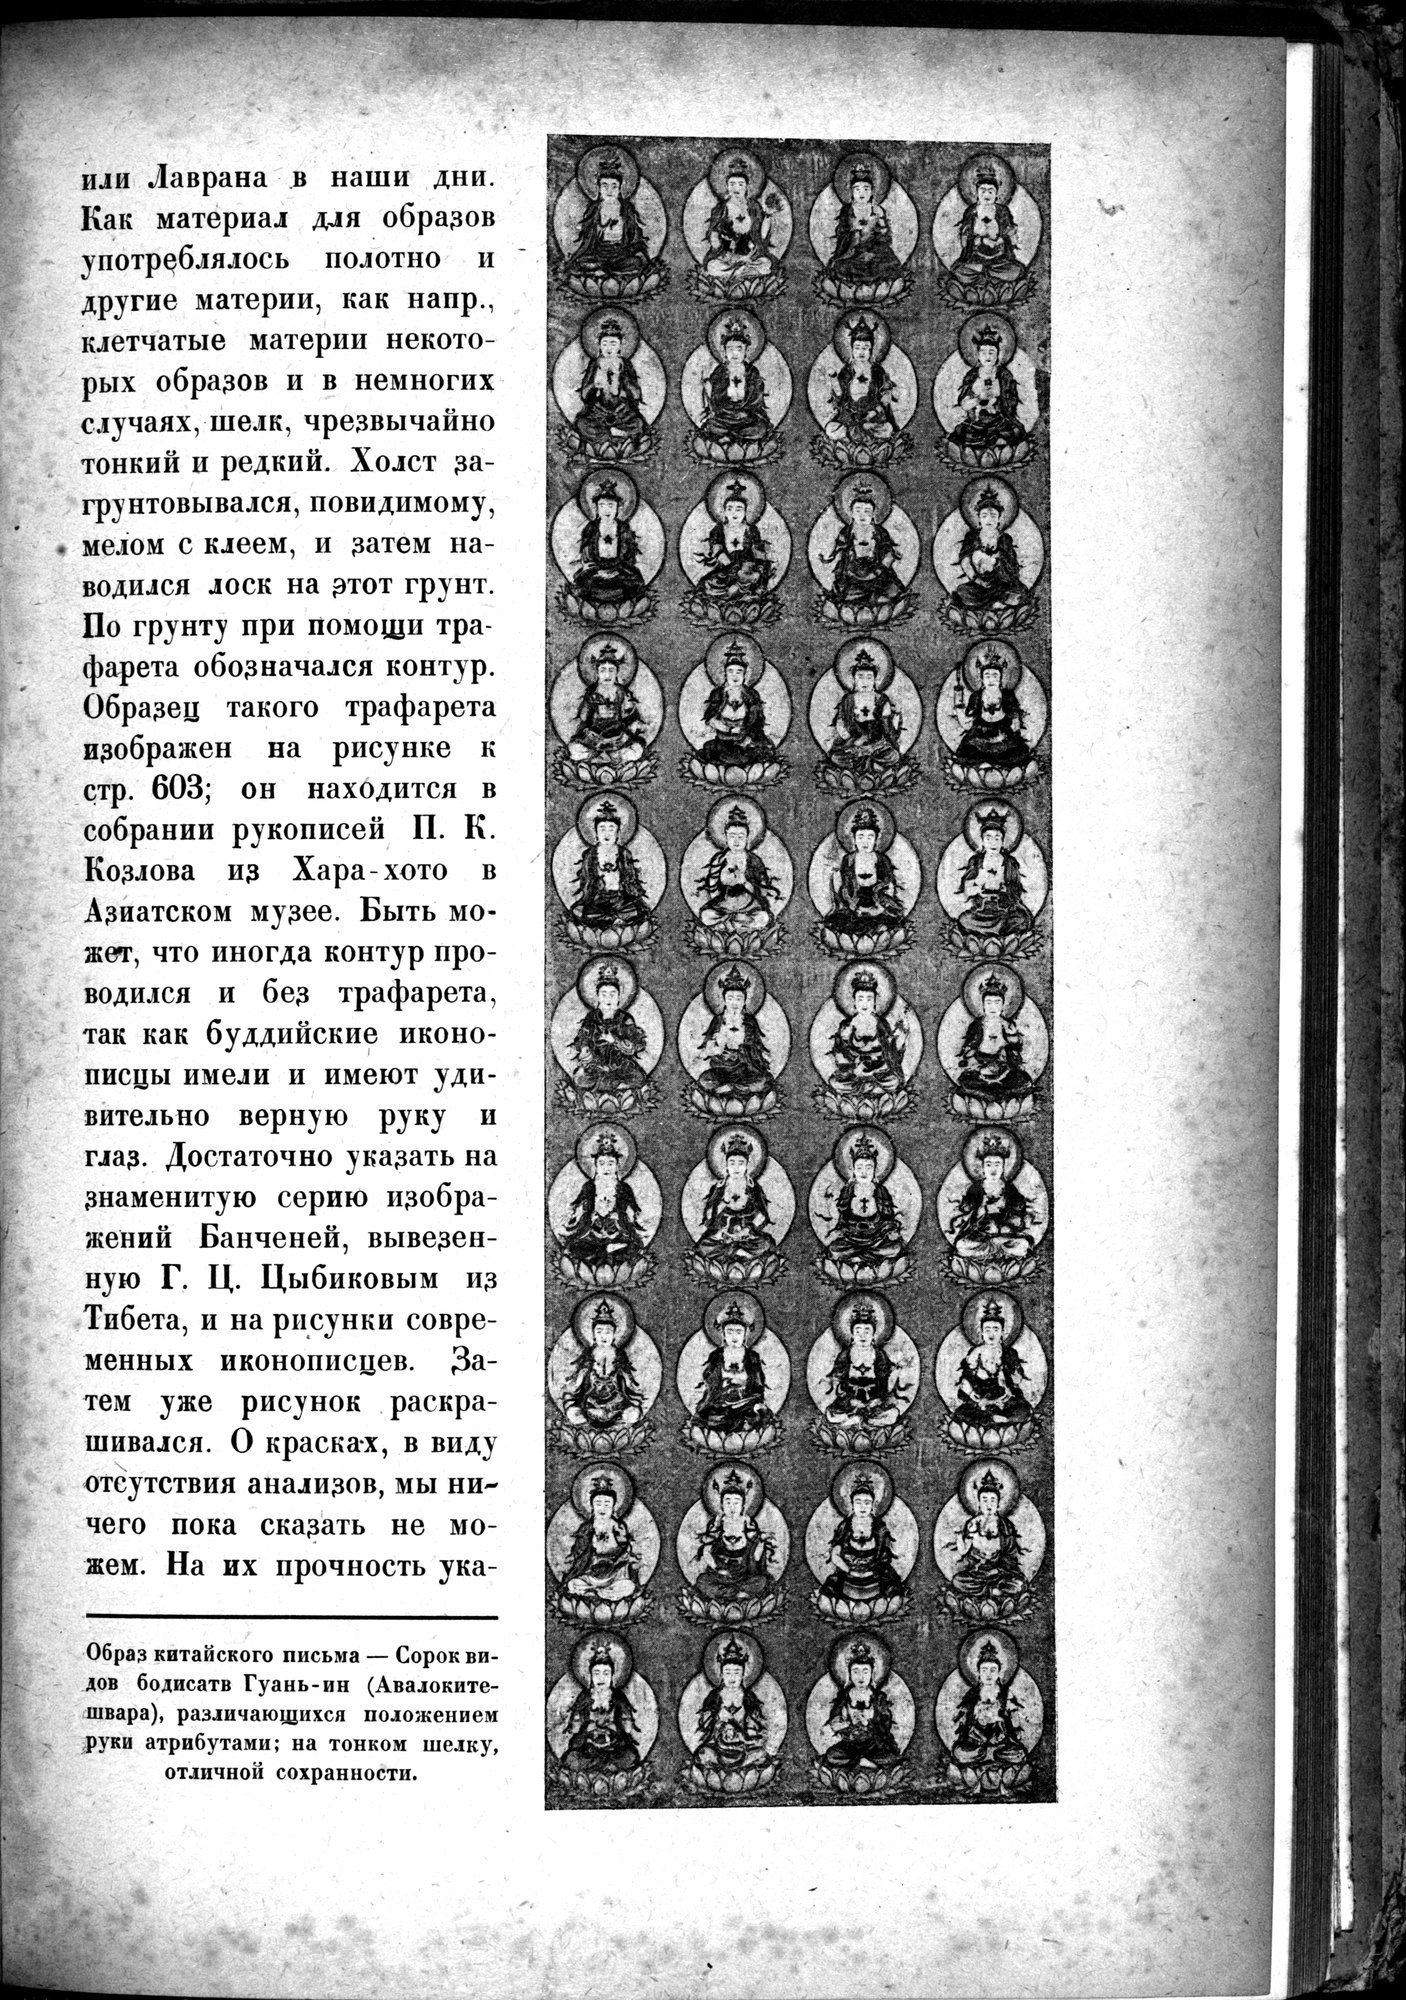 Mongoliya i Amdo i mertby gorod Khara-Khoto : vol.1 / Page 695 (Grayscale High Resolution Image)